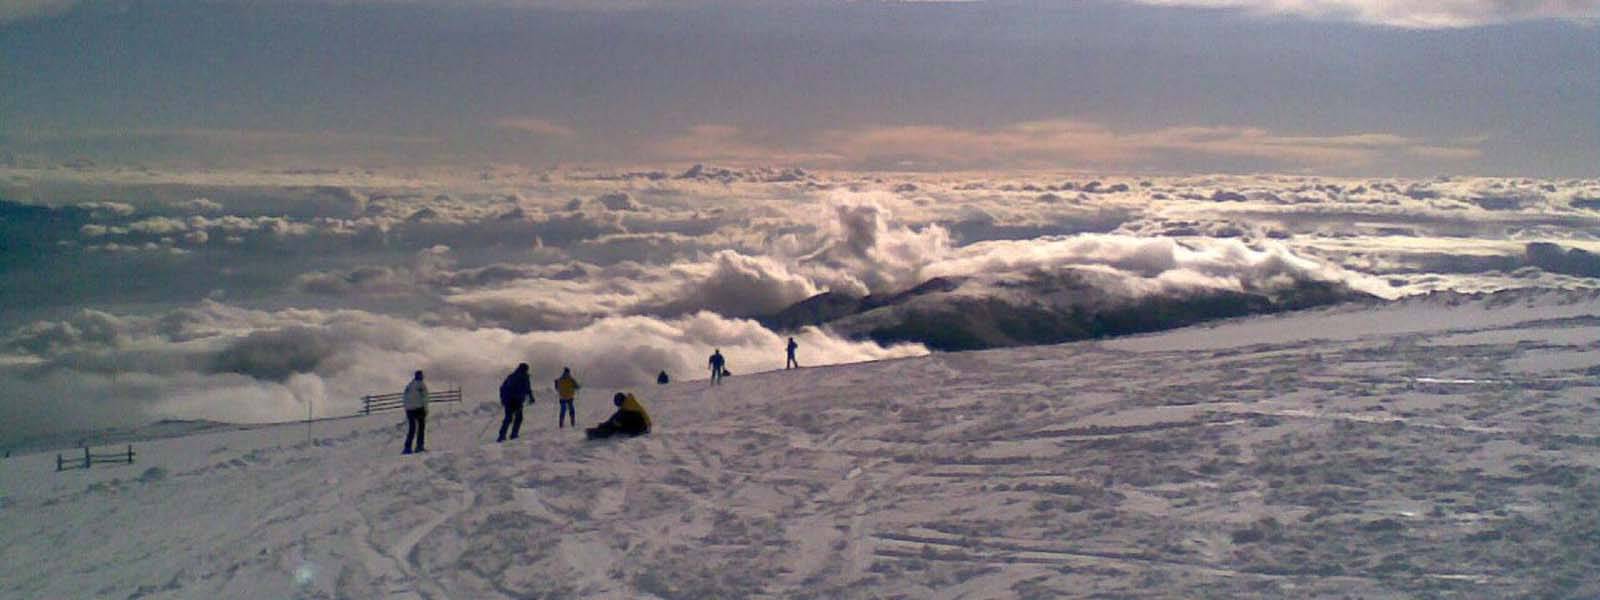 Kaimaktsalan Ski Center